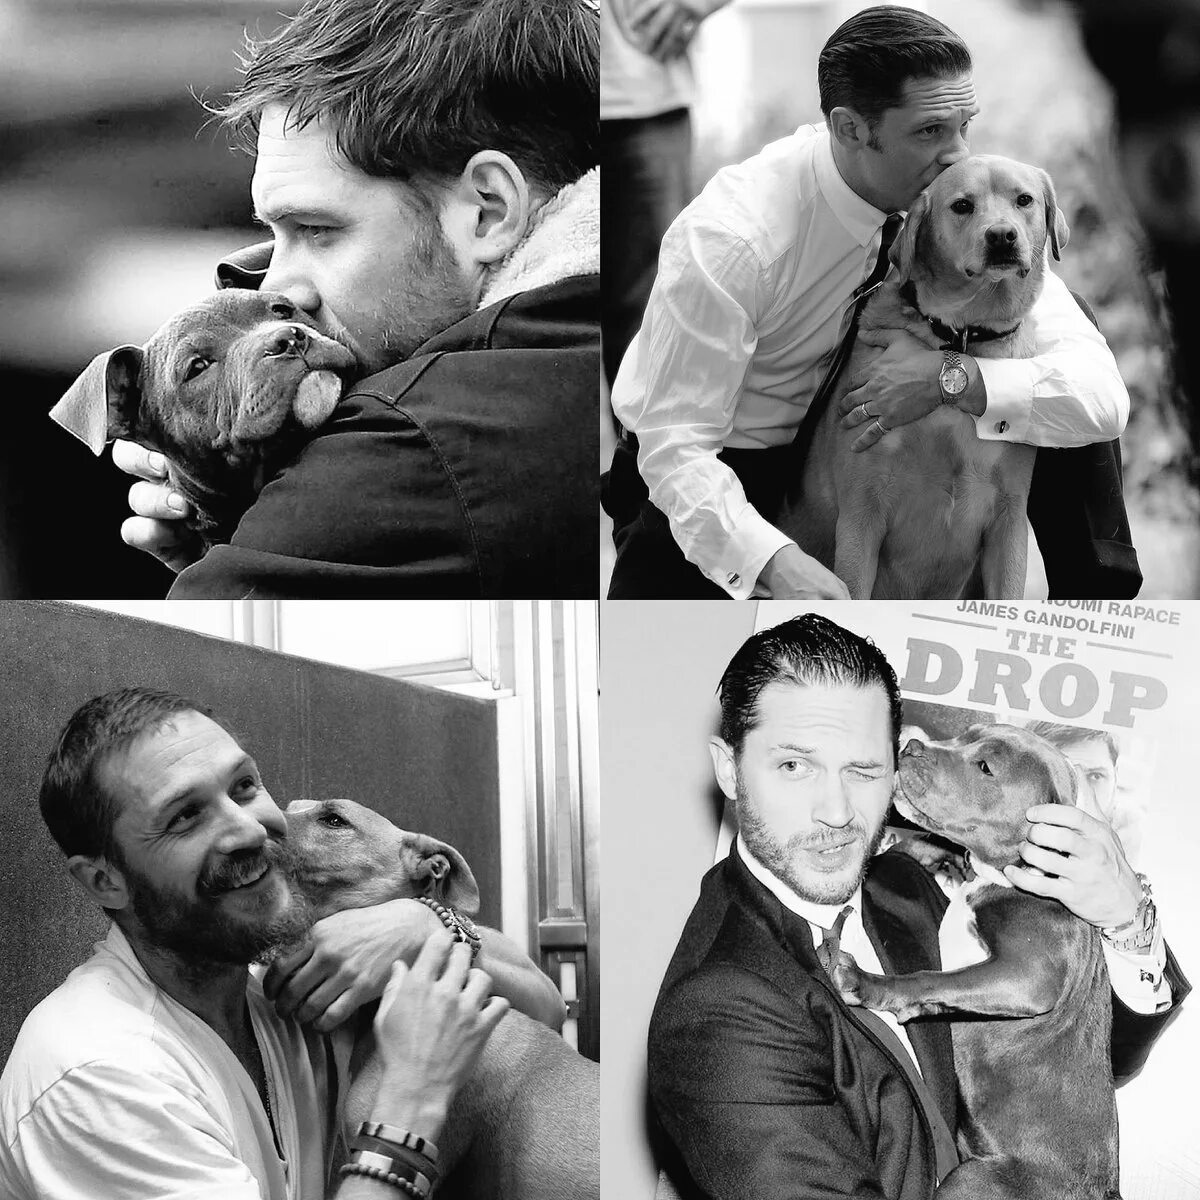 Том Харди с собакой. Том Харди и его собаки. Том Харди коллаж. Собака тома харди